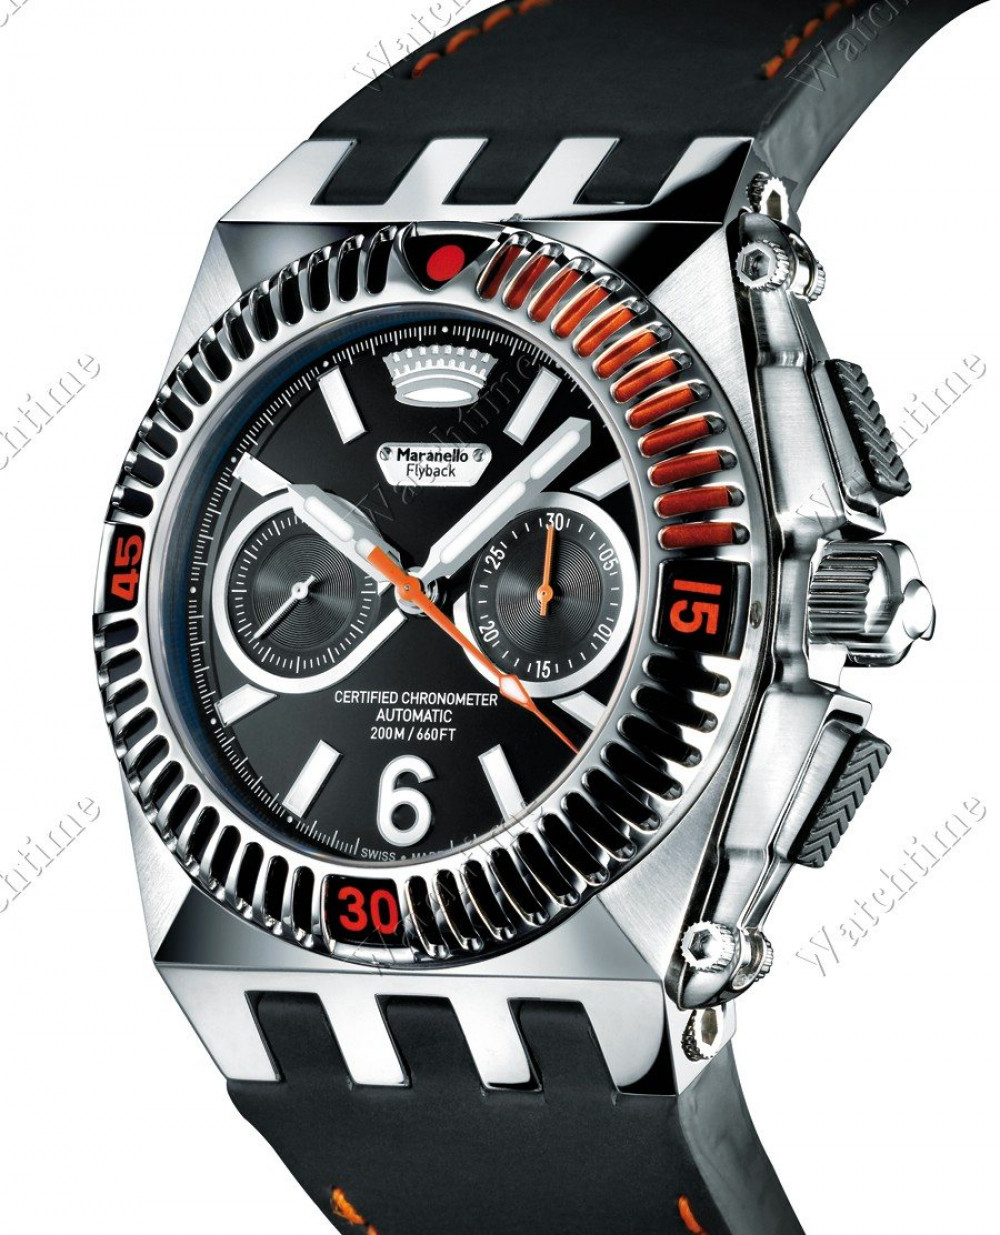 Zegarek firmy maranello, model Automatic Chronograph Flyback Chronometer